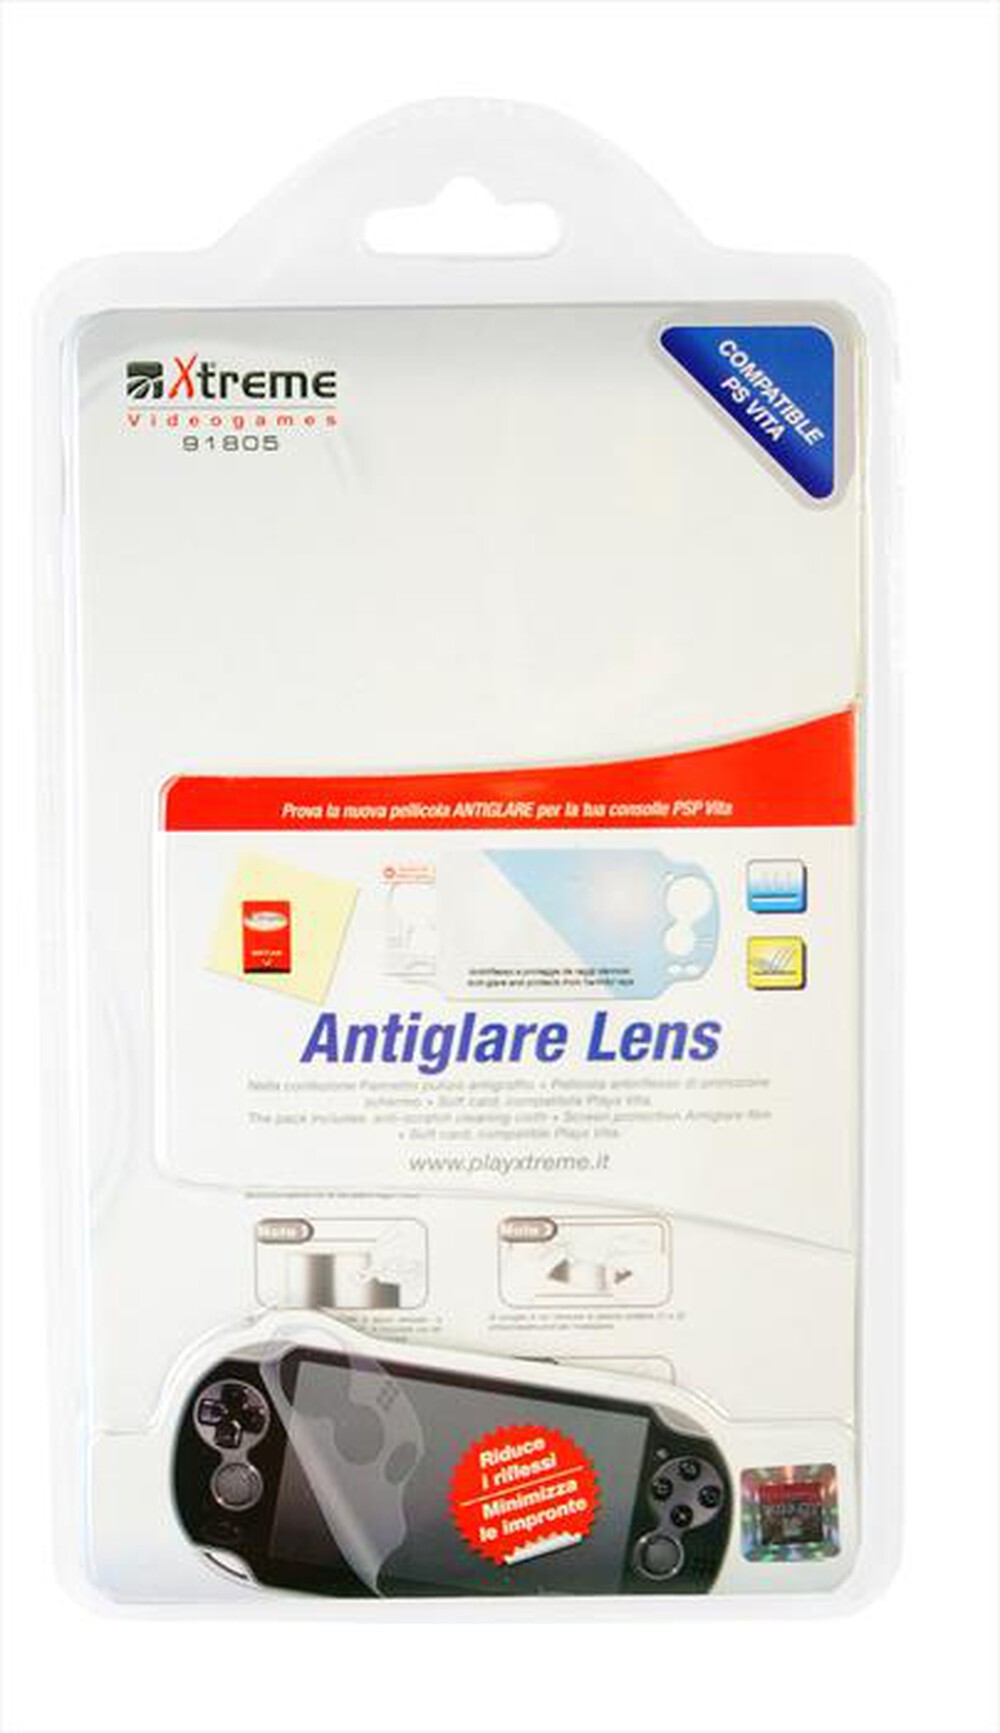 "XTREME - 91805 - Antiglare Lens"